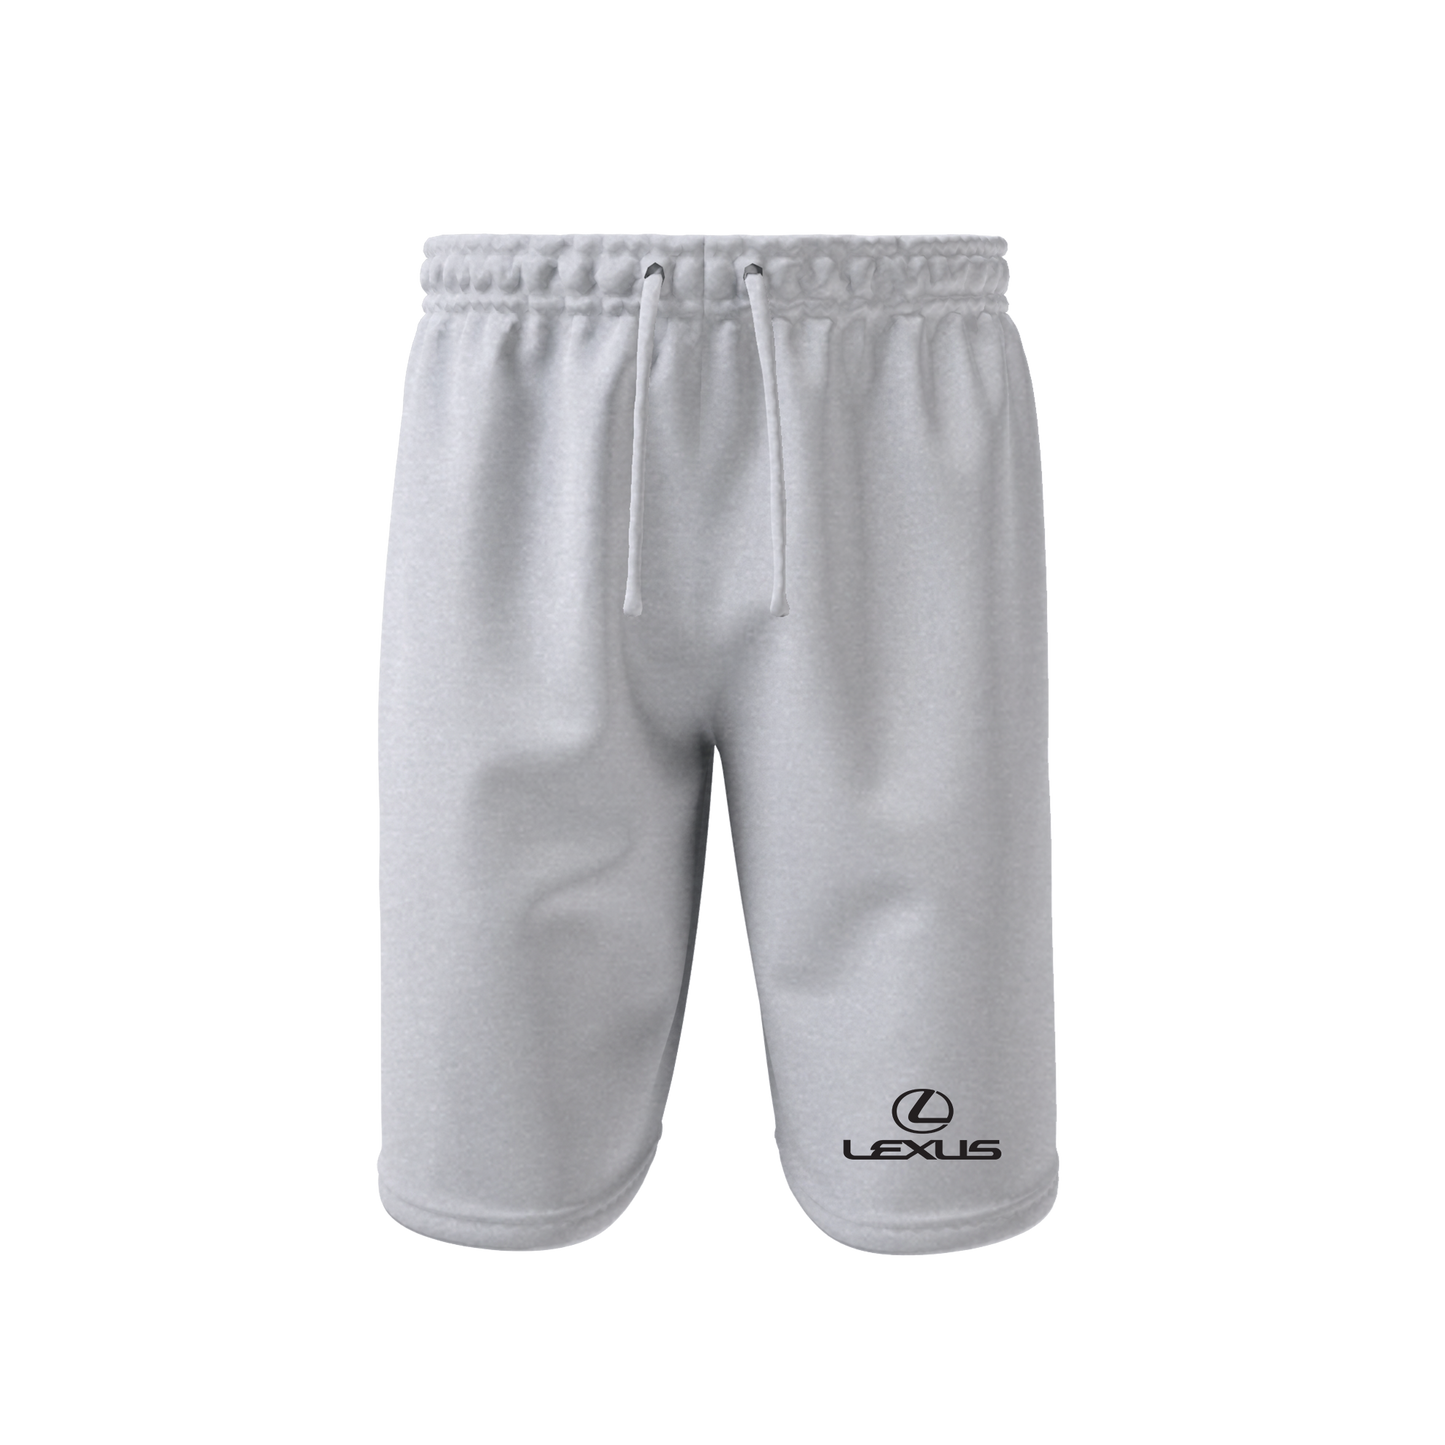 Men’s Lexus Car Athletic Fleece Shorts